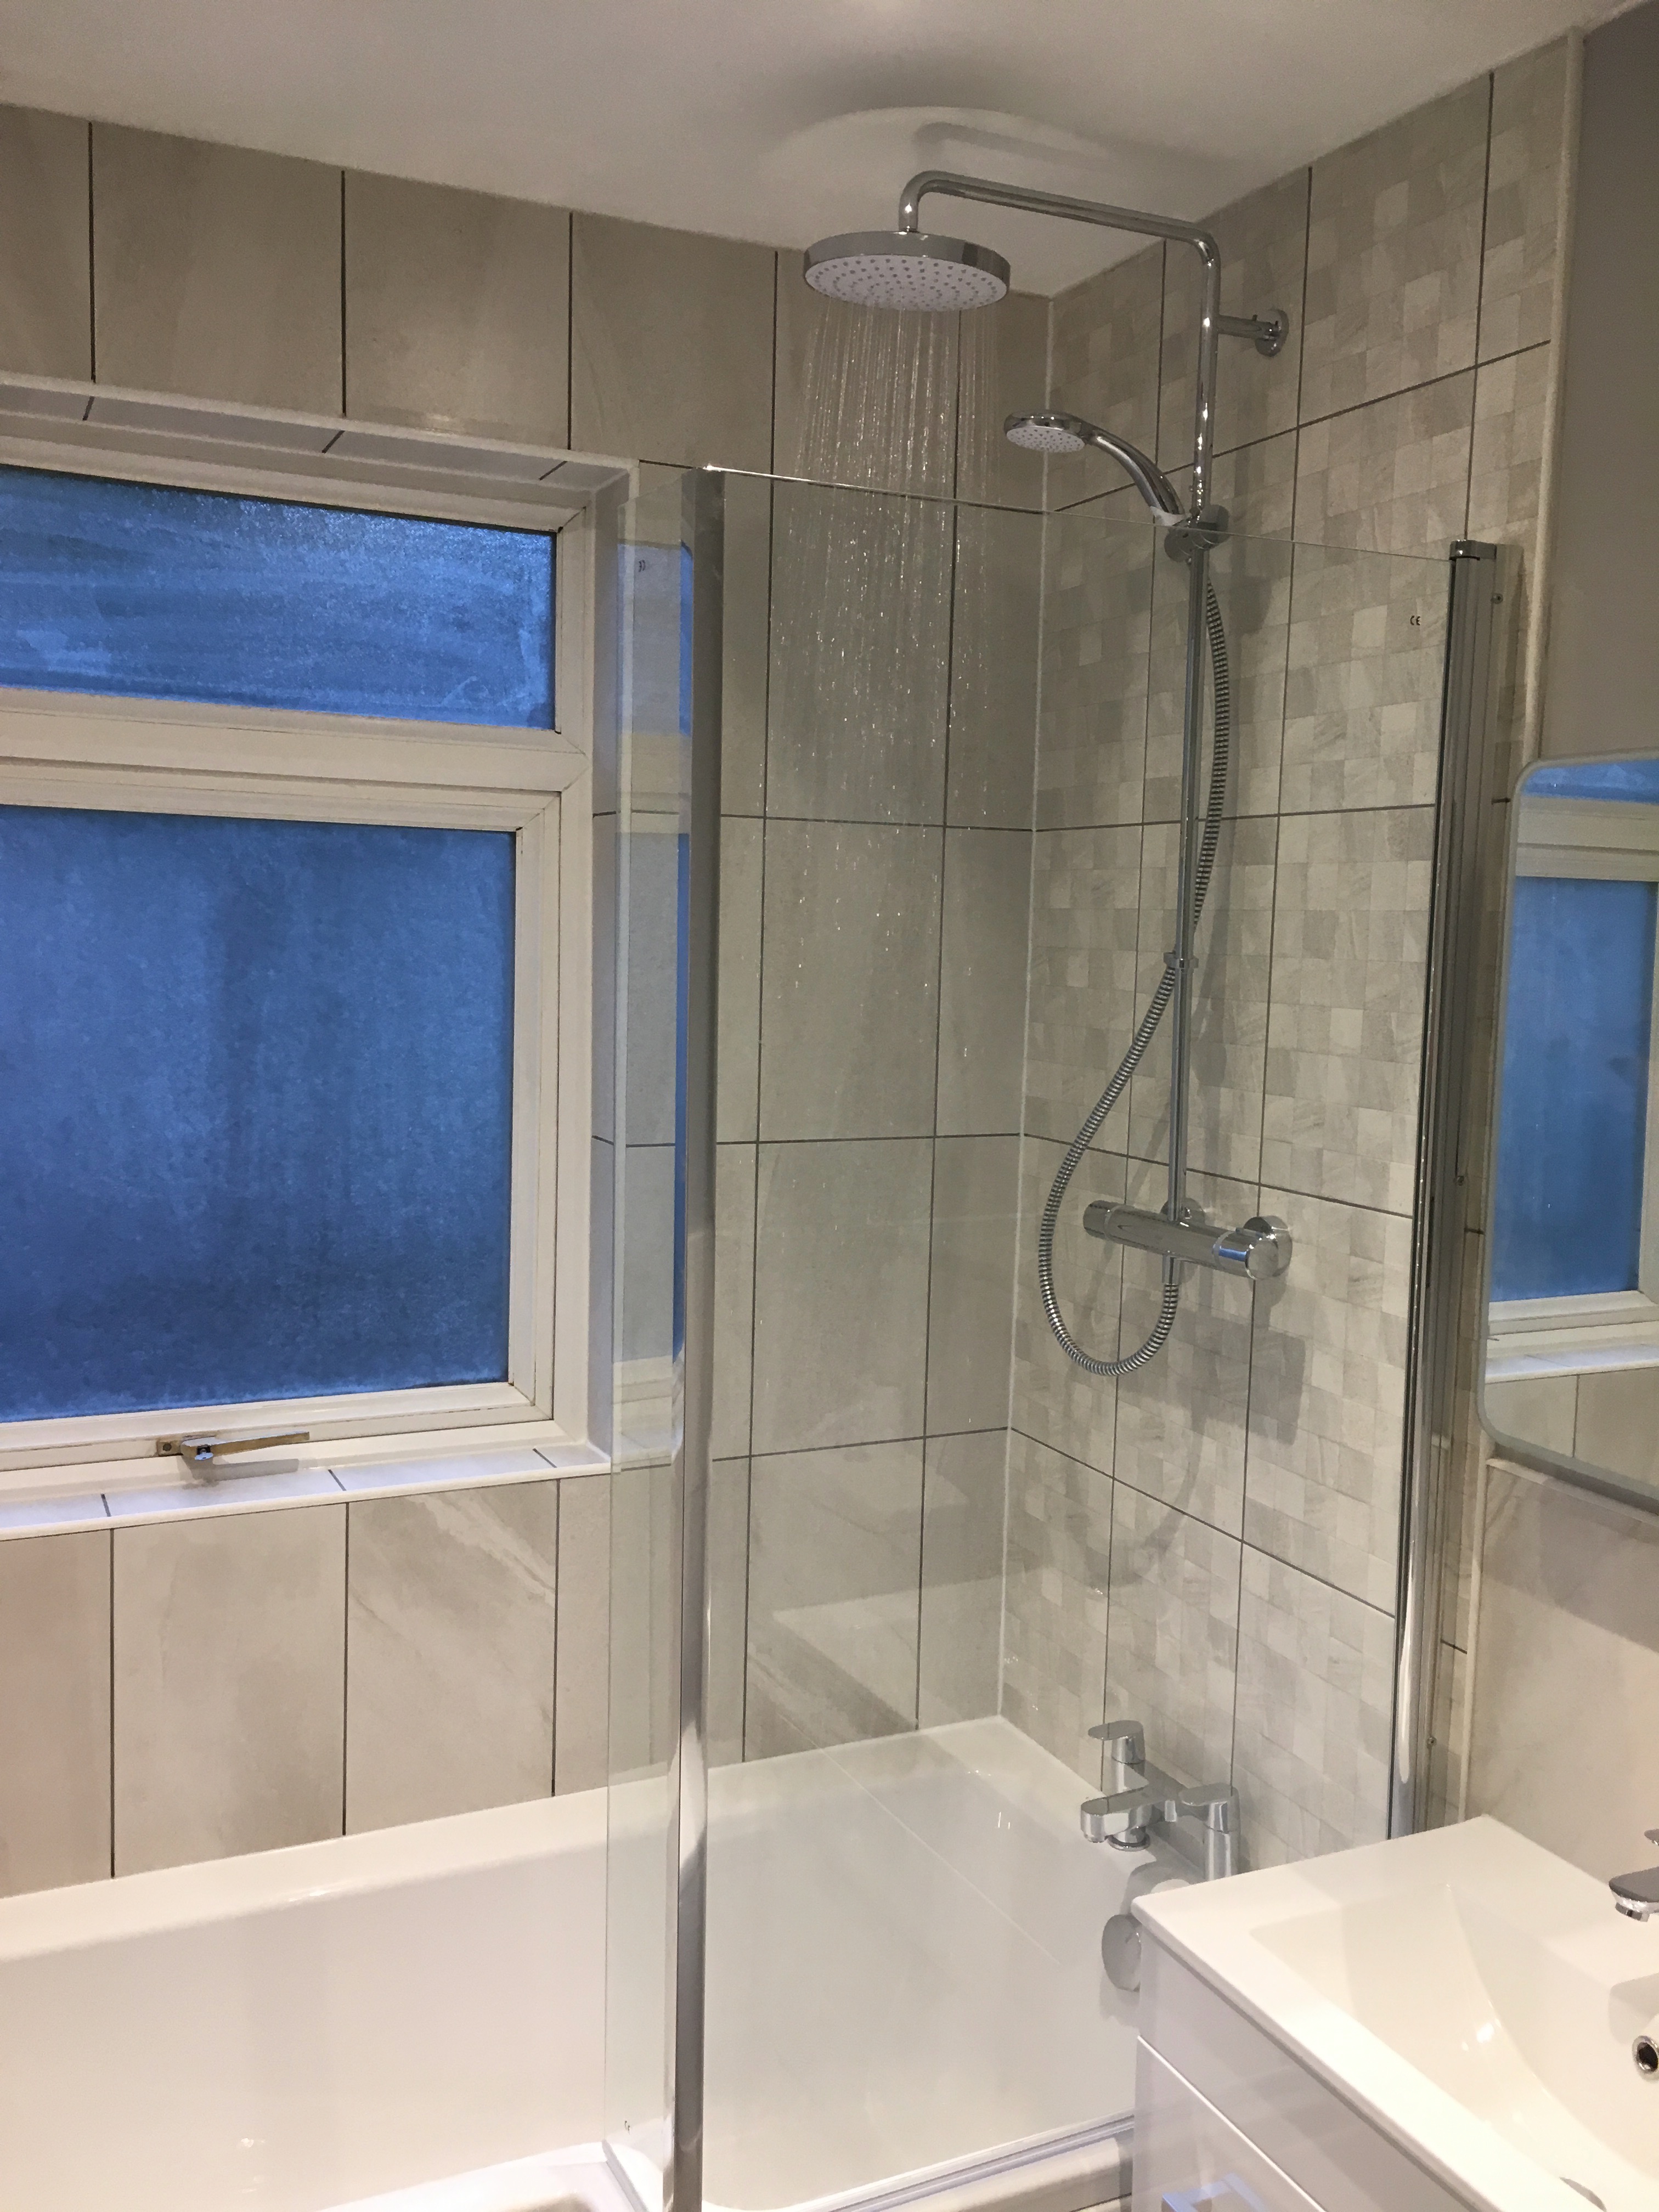 Bathroom renovation done by Anton Plumbing & Heating in Bath